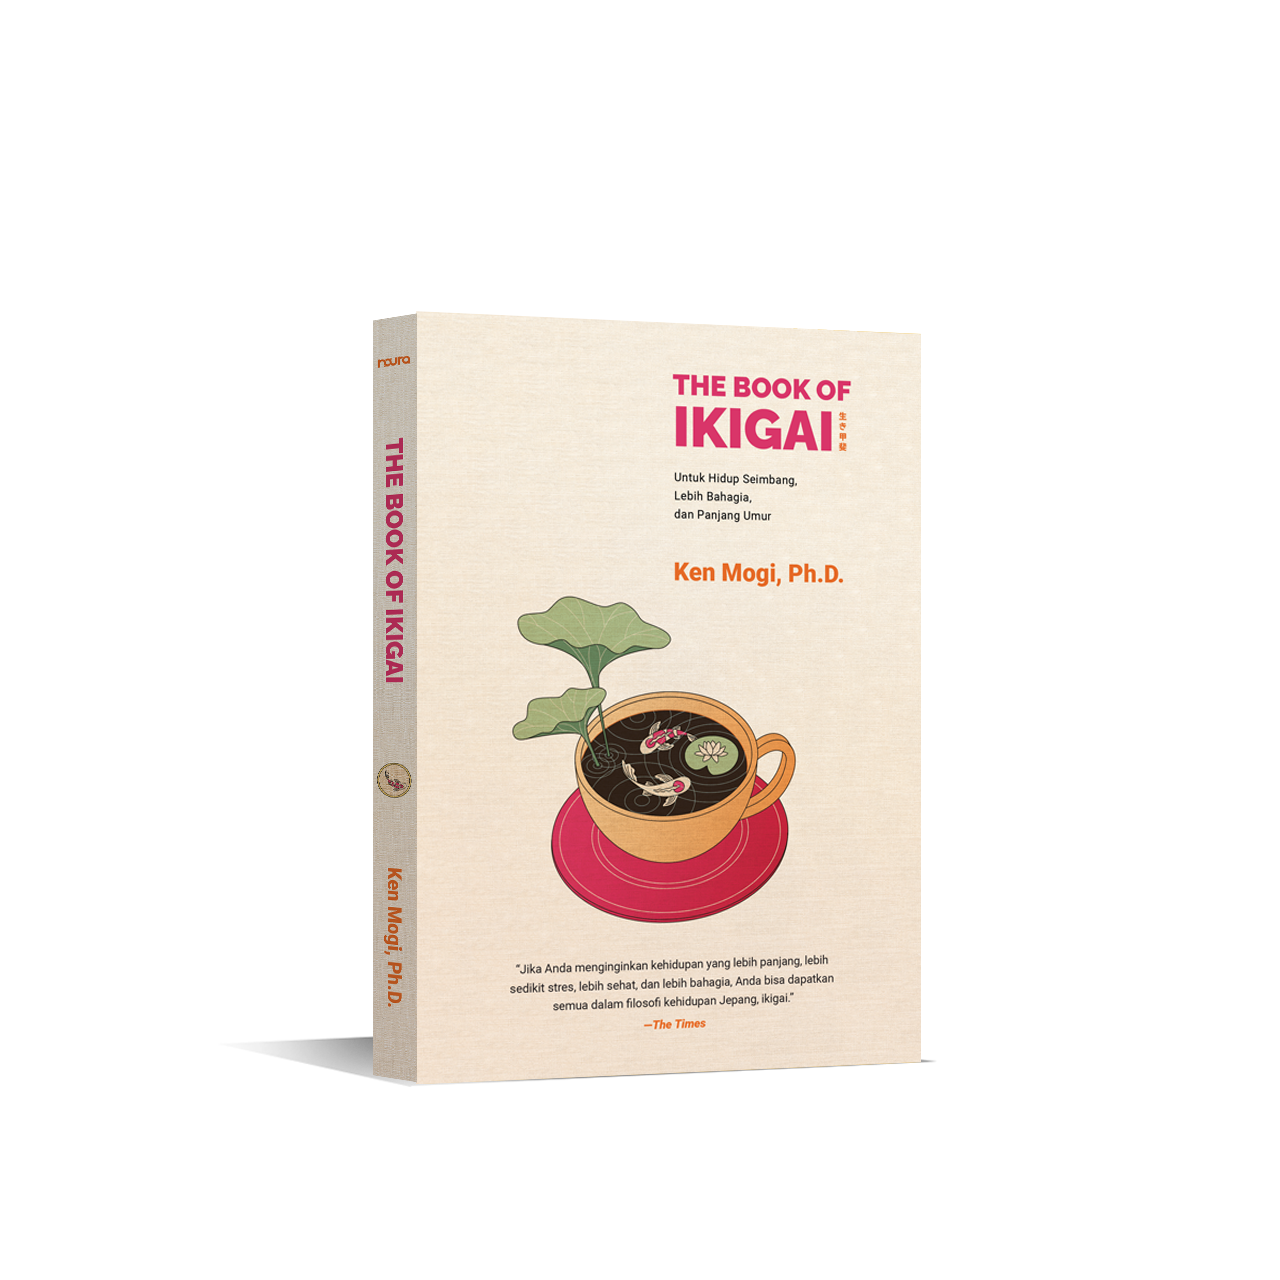 THE BOOK OF IKIGAI